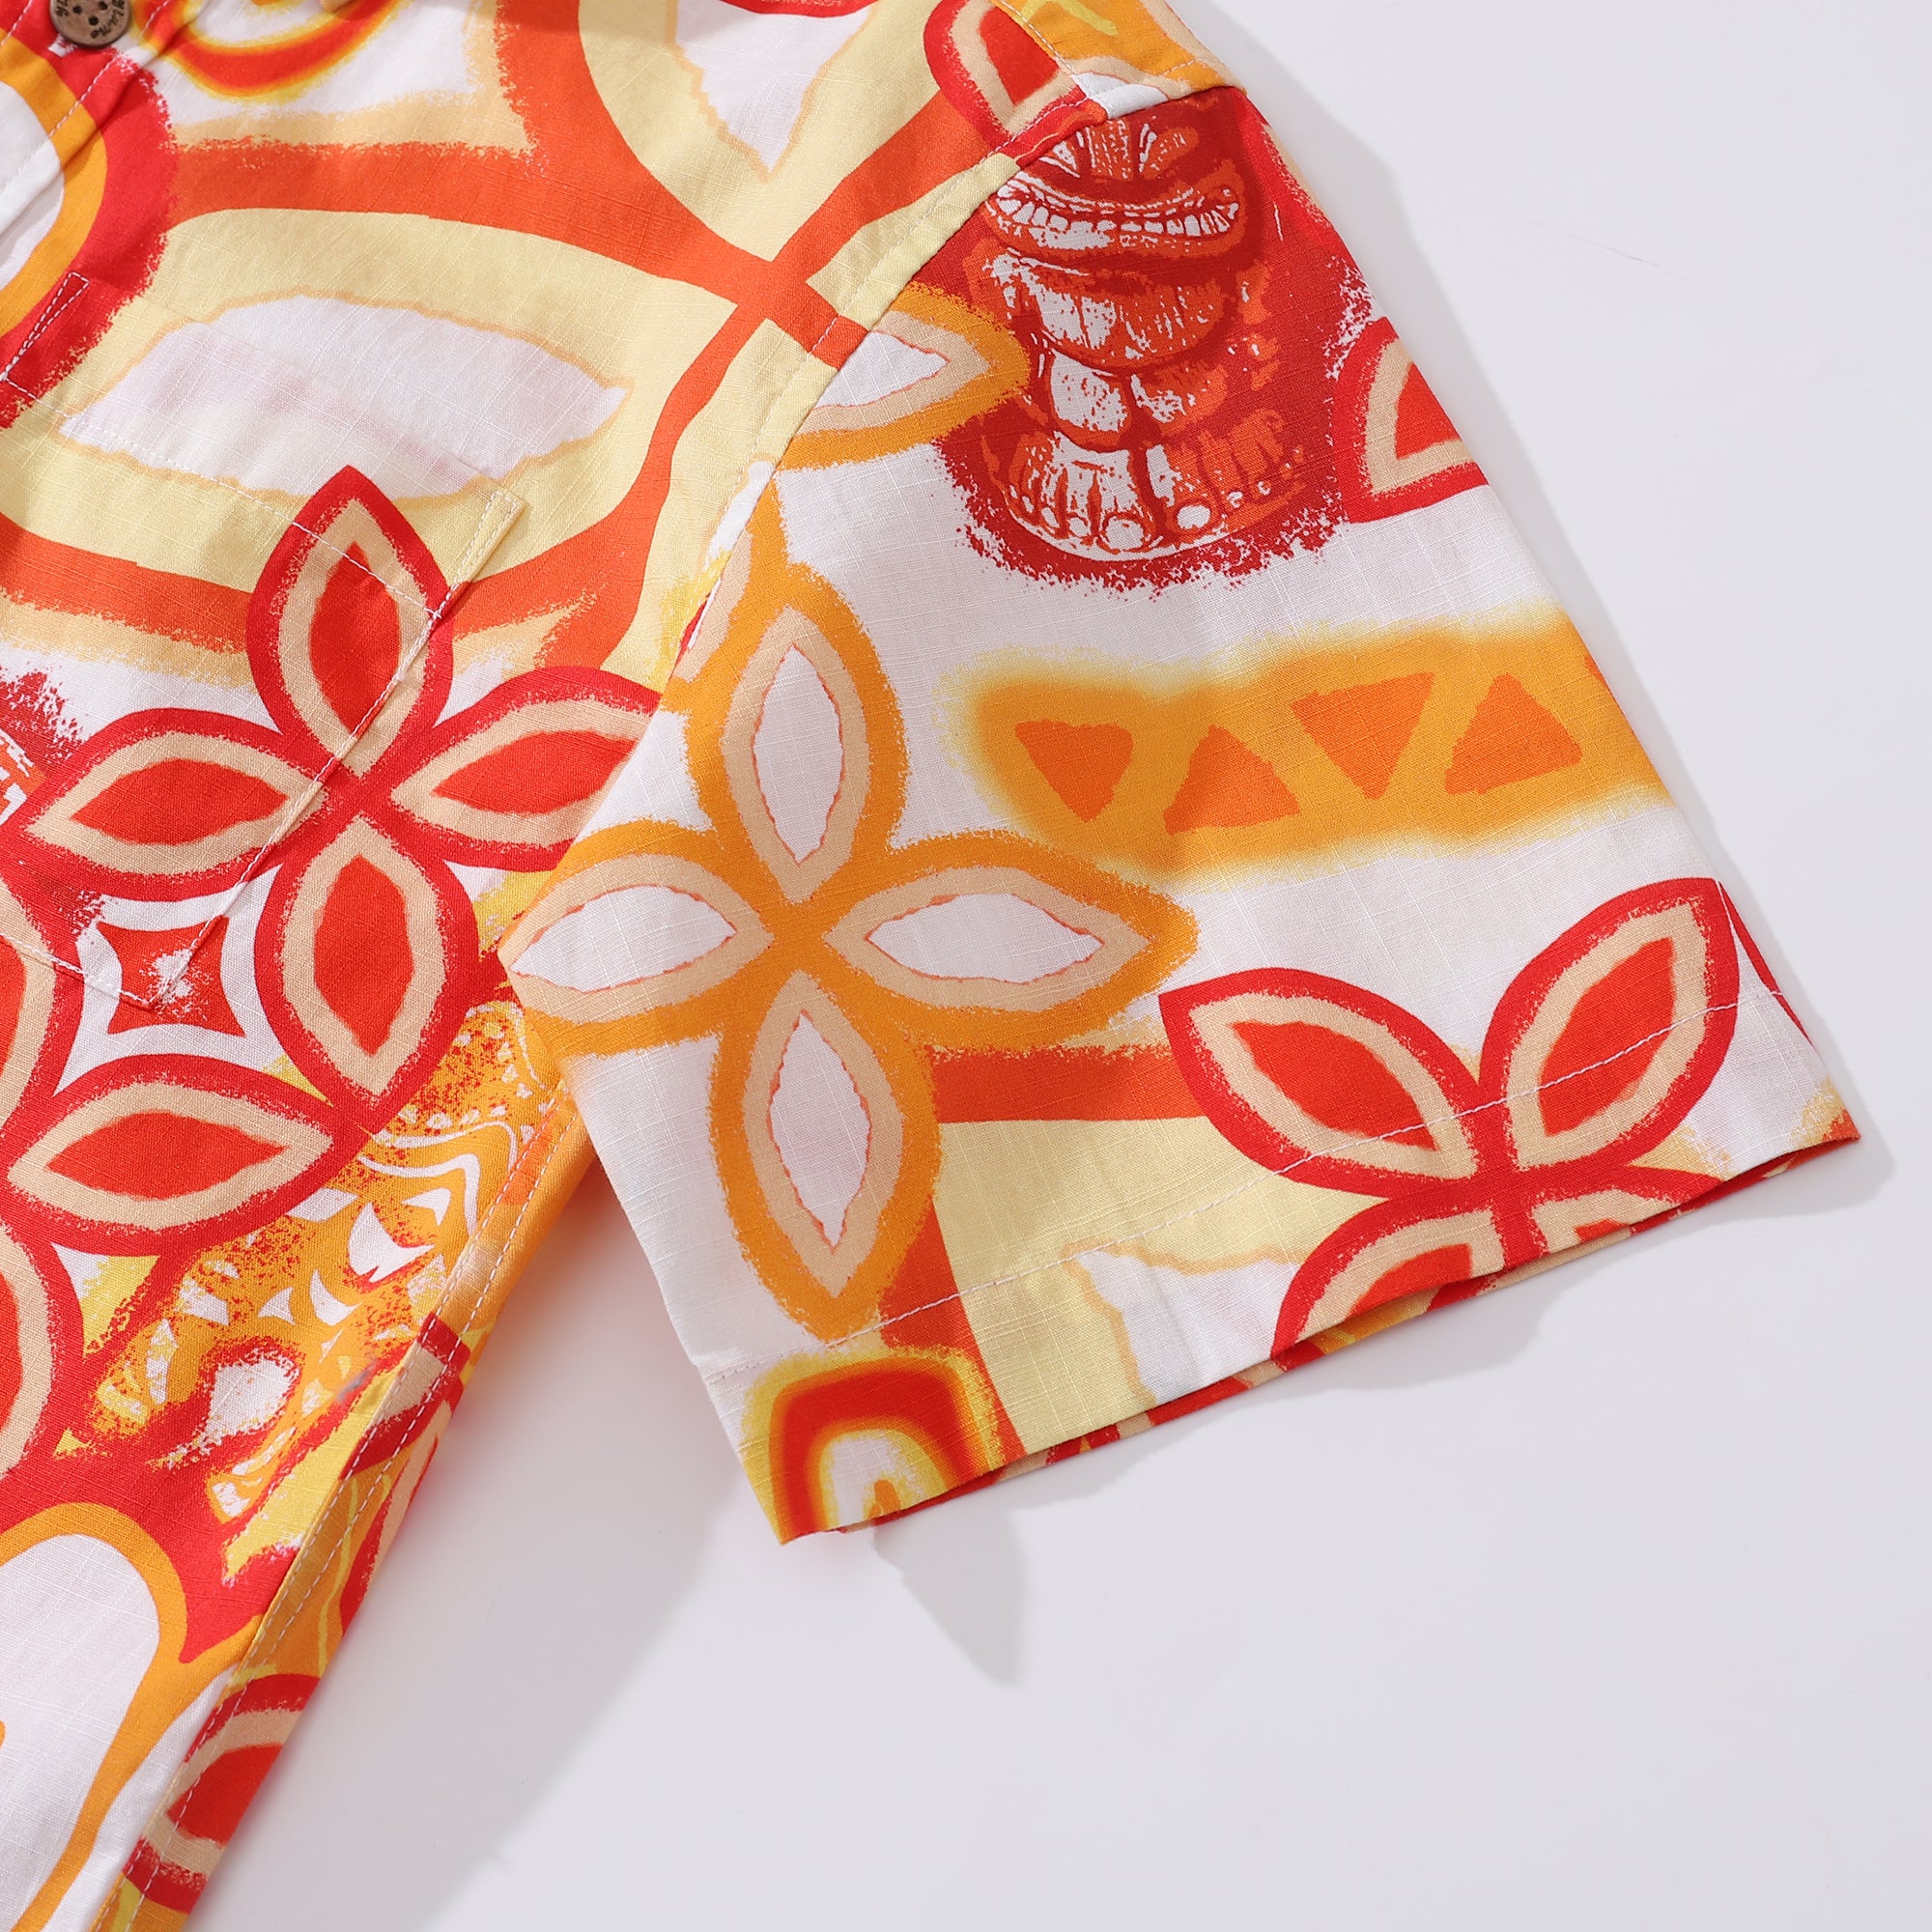 Children's Hawaiian Shirt Tikirob Designer Shirt Orange Totem Print Cotton Button-down Short Sleeve